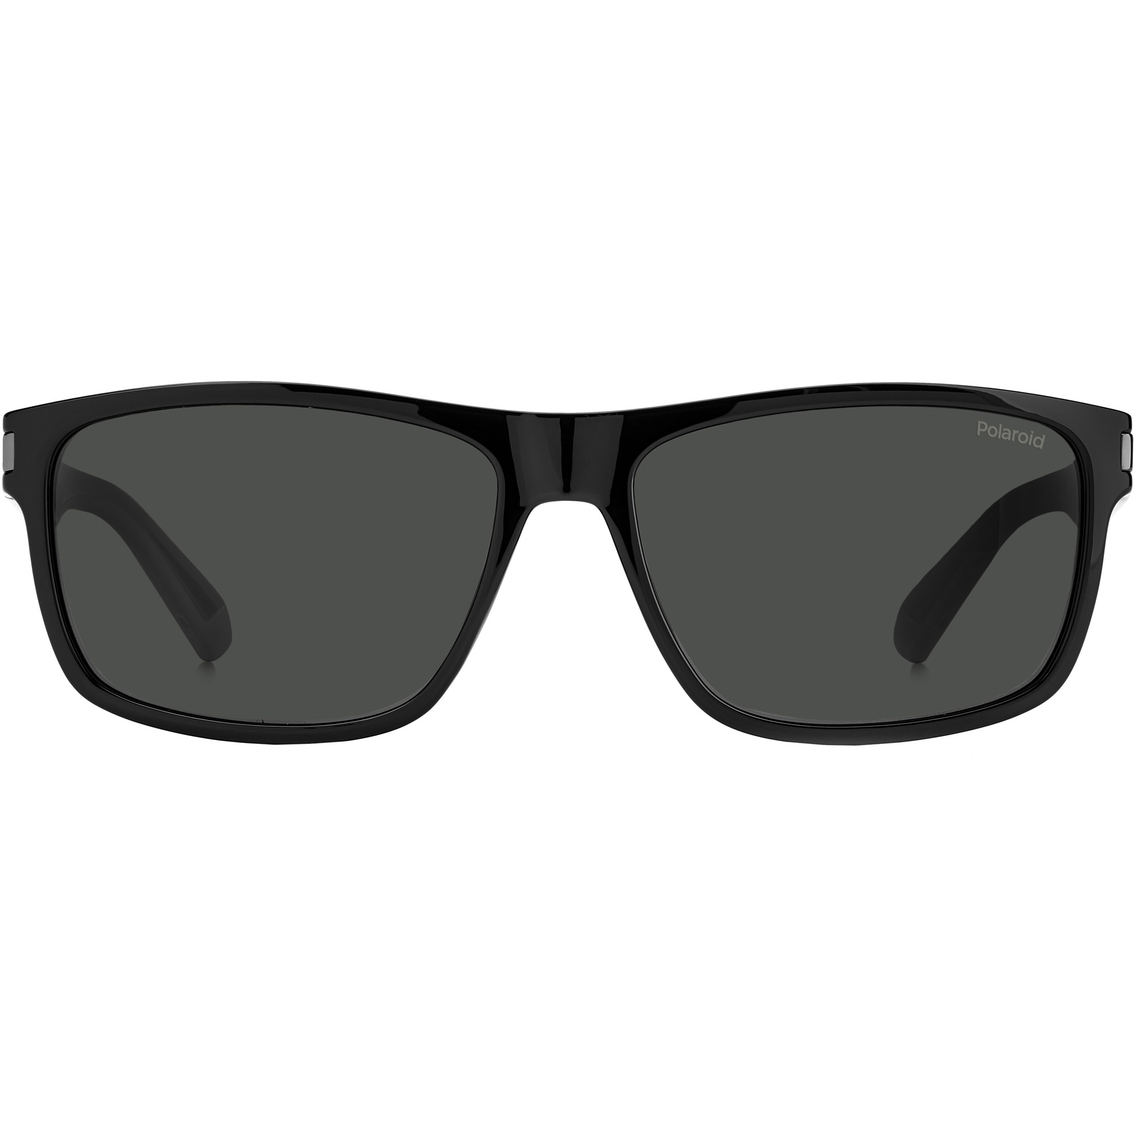 Polaroid Non RX ABLE Polarized Sunglasses PLD2121S - Image 2 of 3